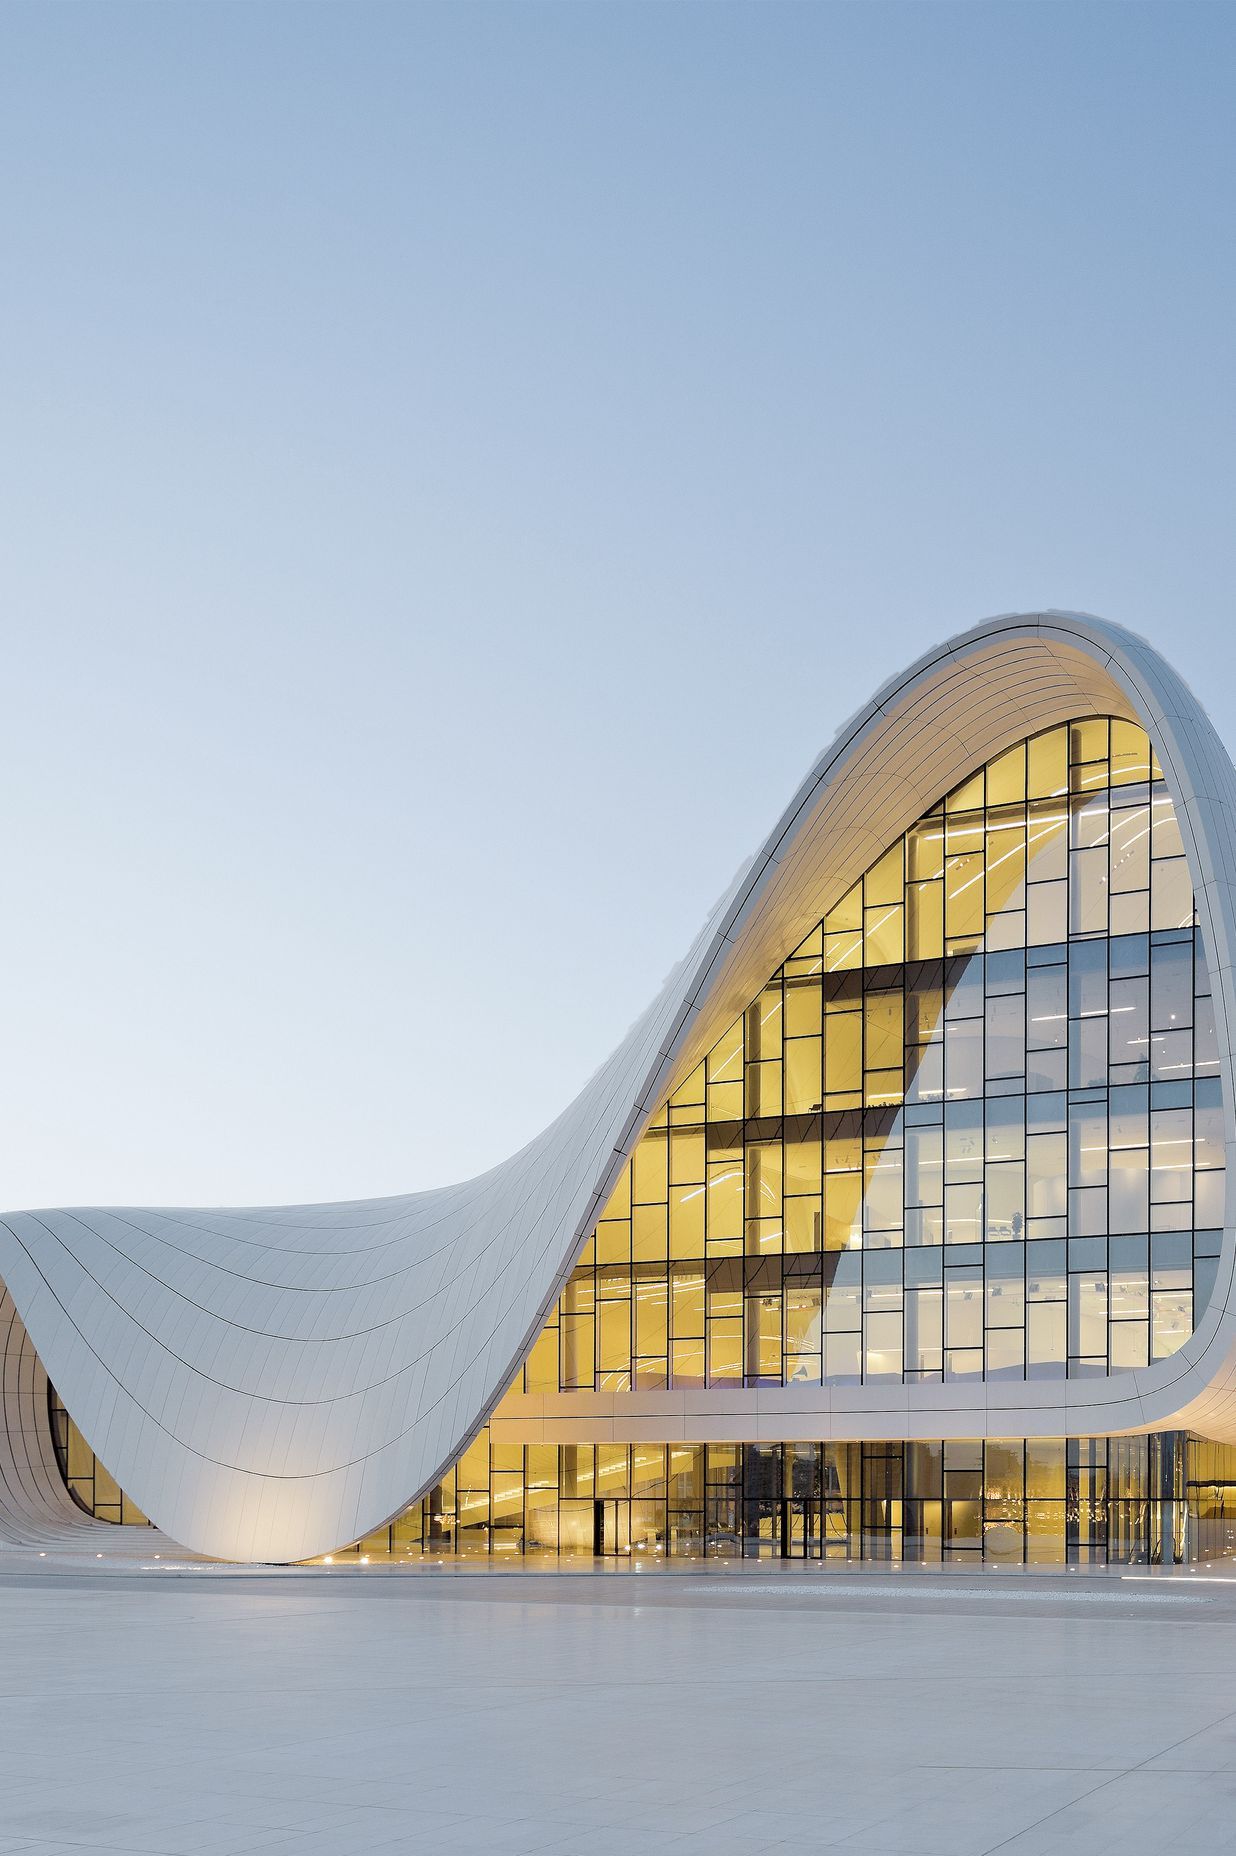 The Heydar Aliyev Center, designed by Zaha Hadid